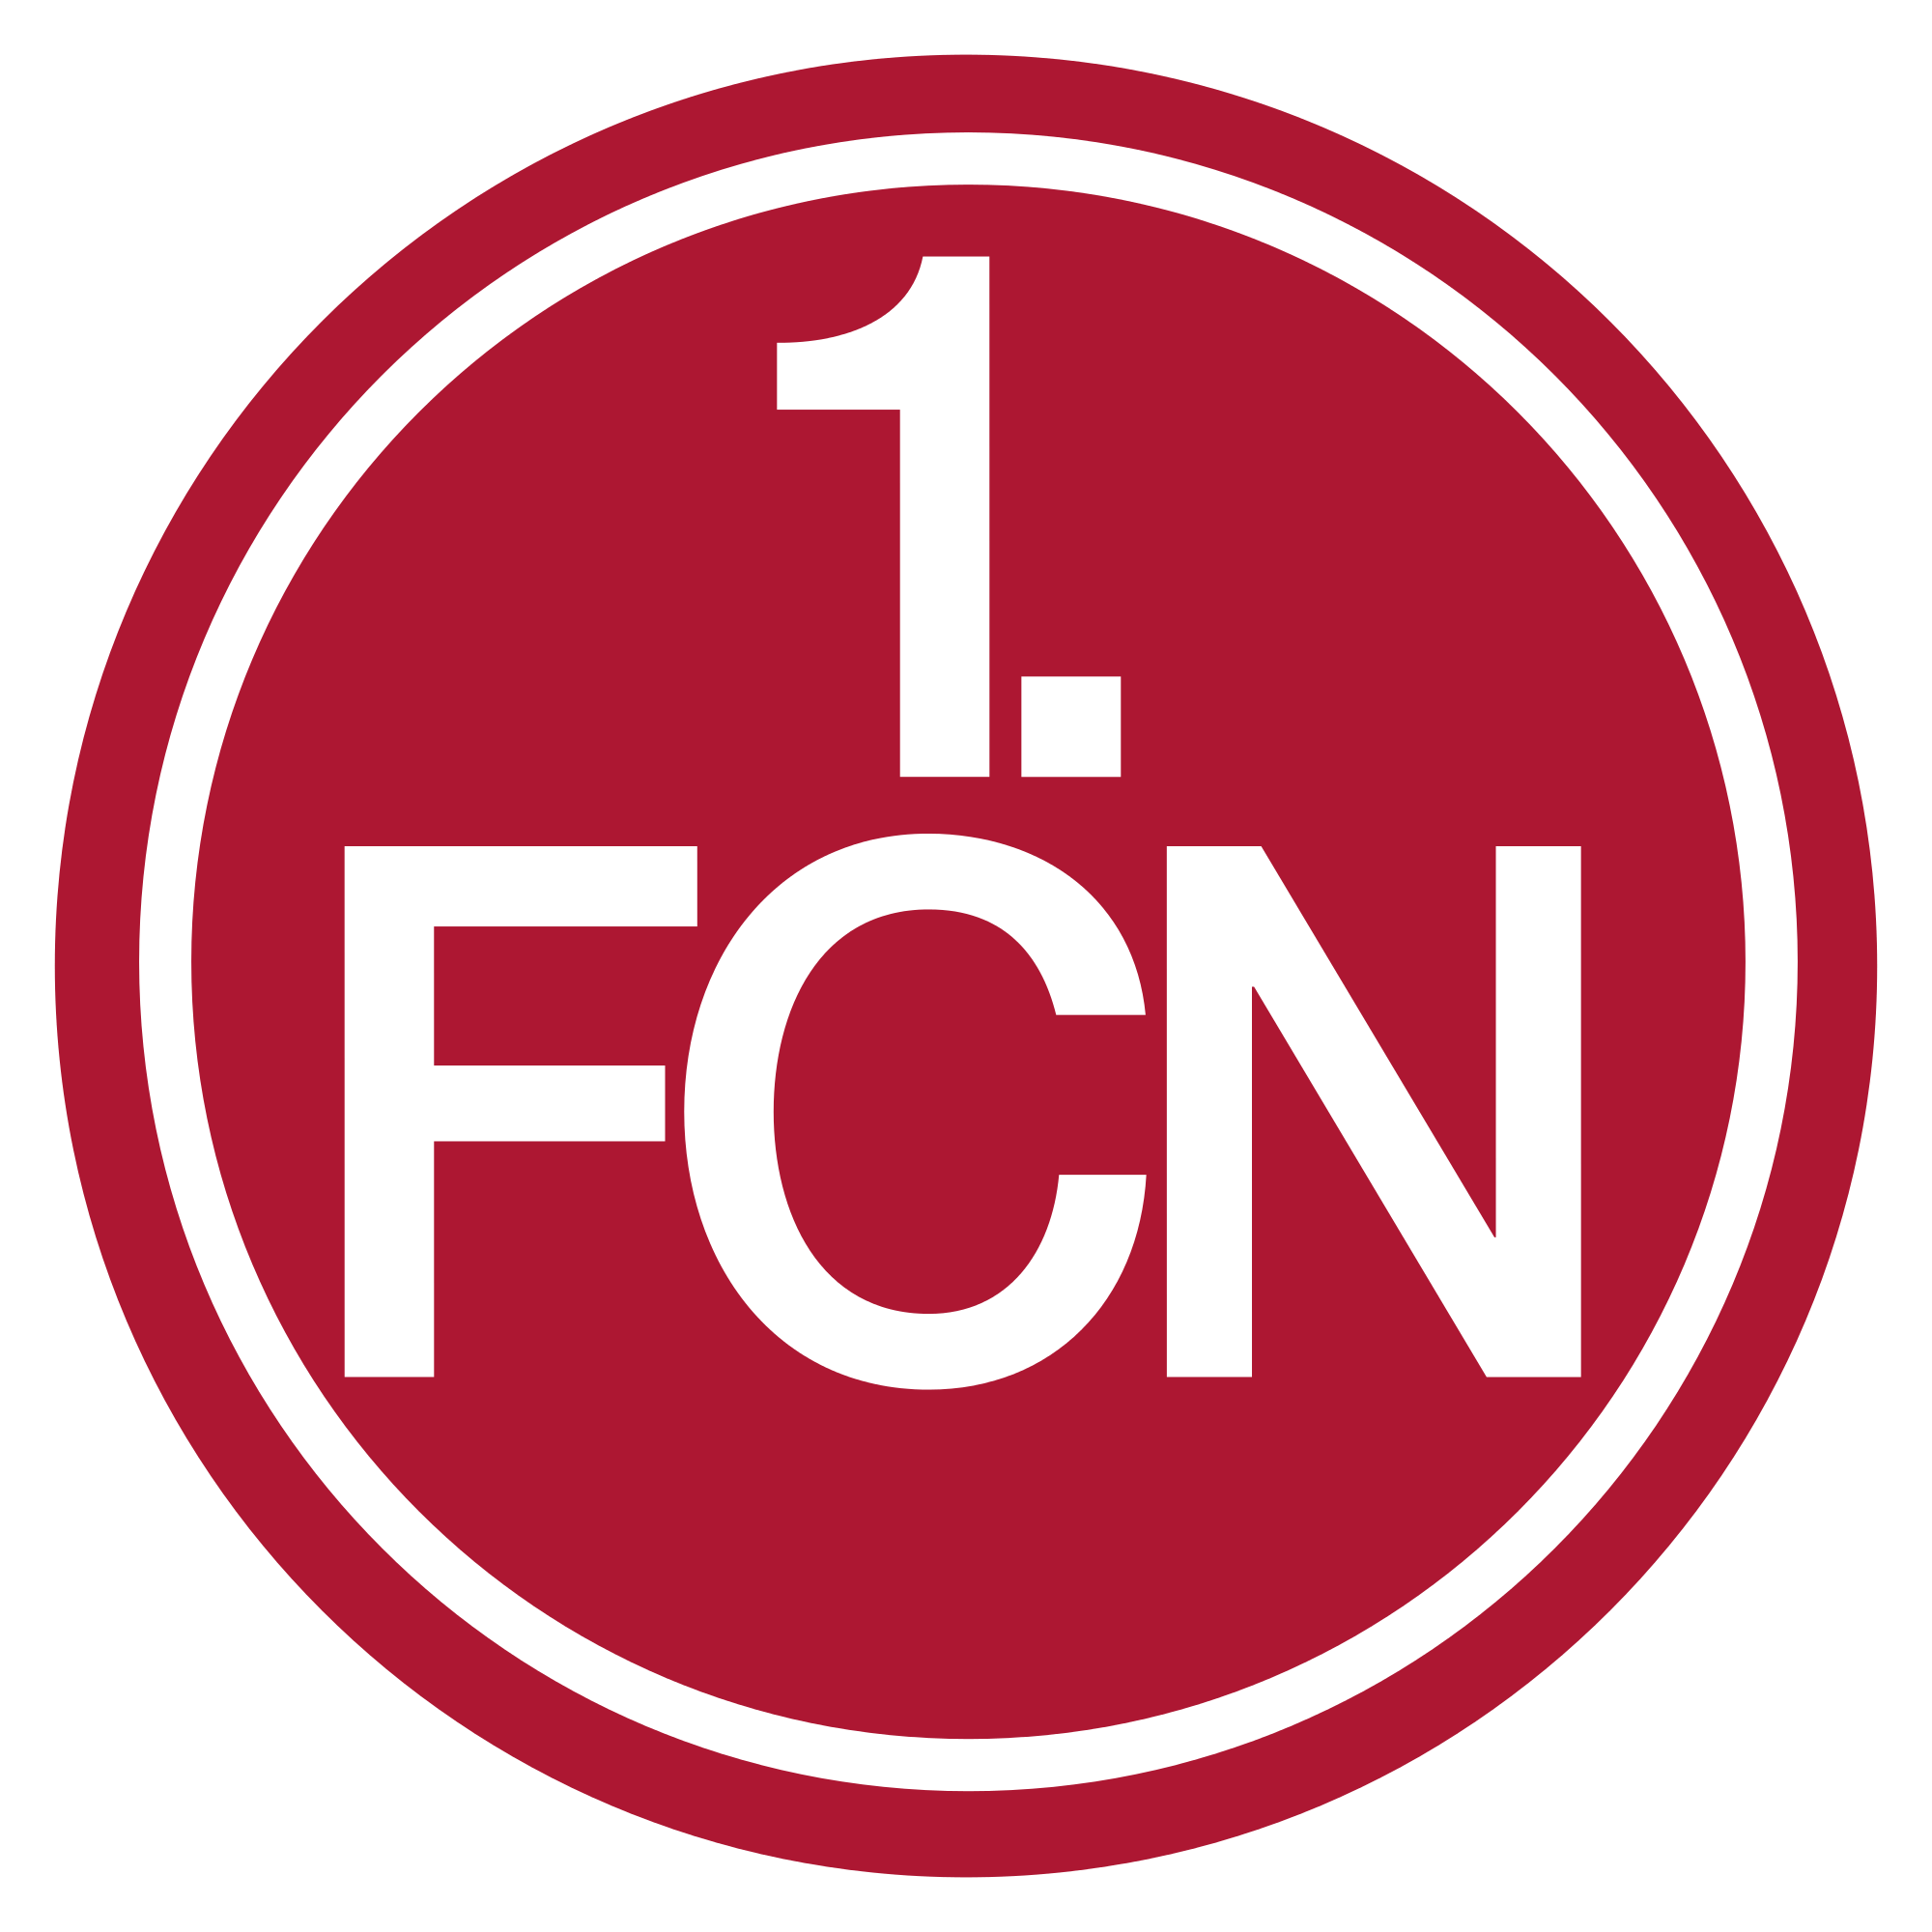 FFC Sports Club Logo - 1. FC Nürnberg